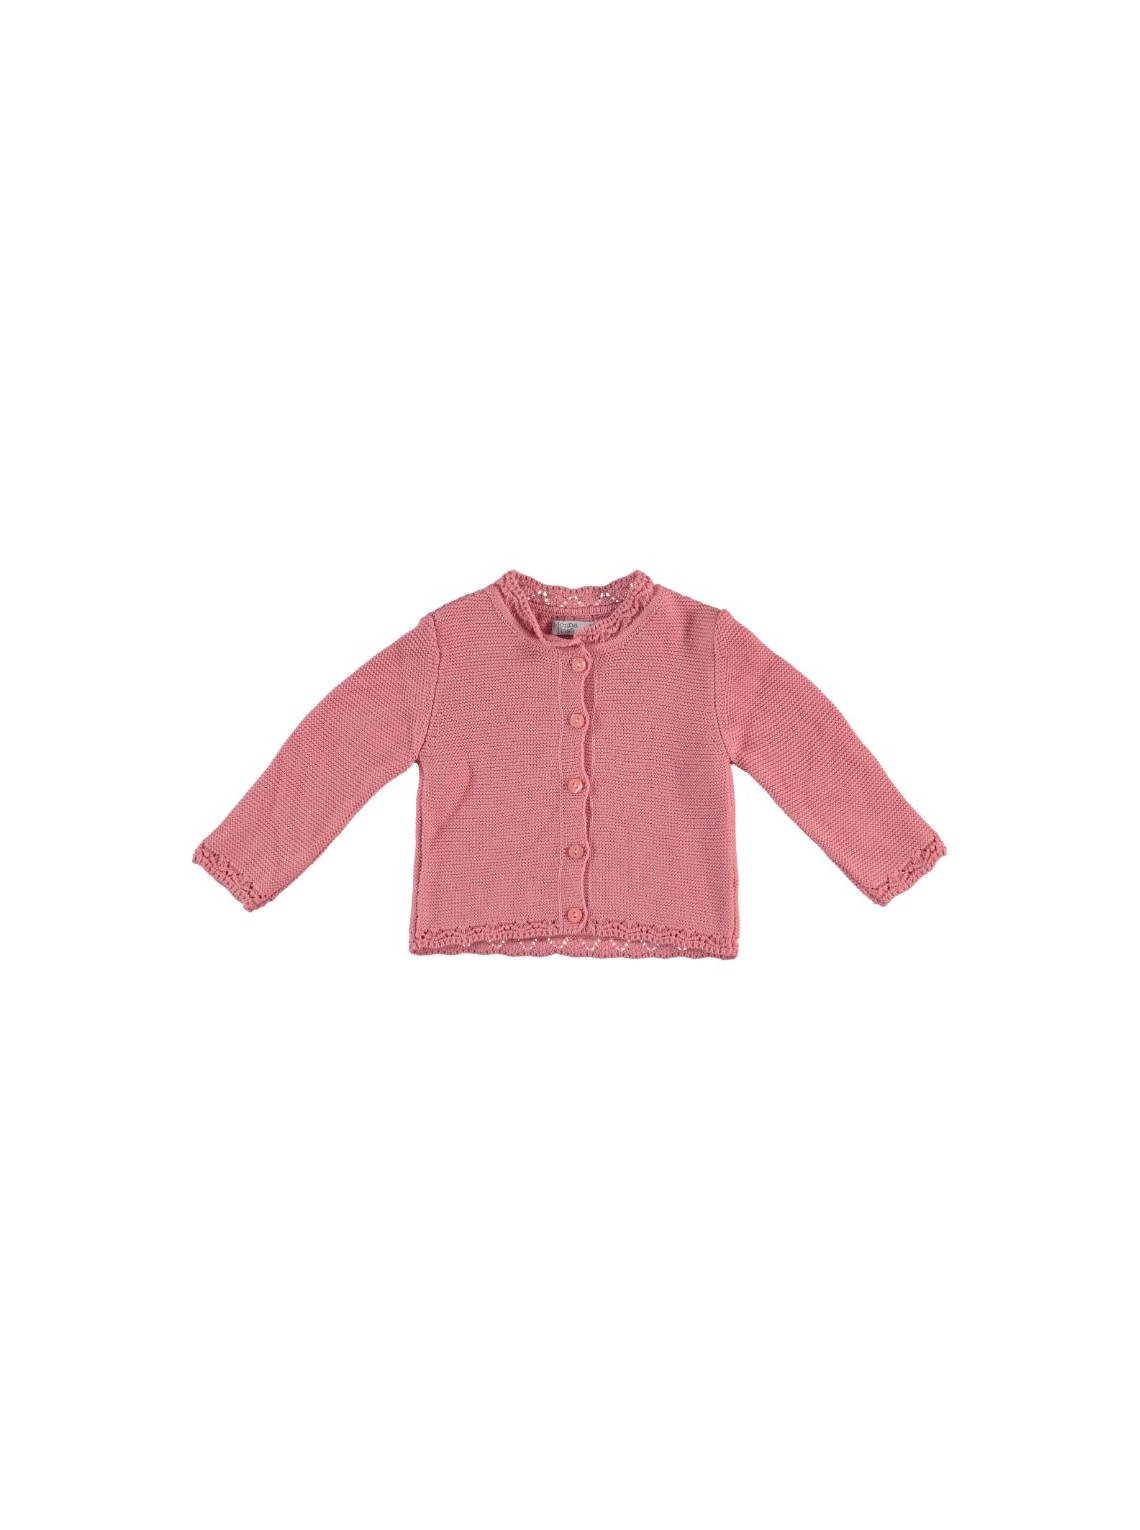 Exclusive Brand - Baby Girl Pink Shirt / 9M | 12M | 18M | 24M - Kids Fashion Turkey